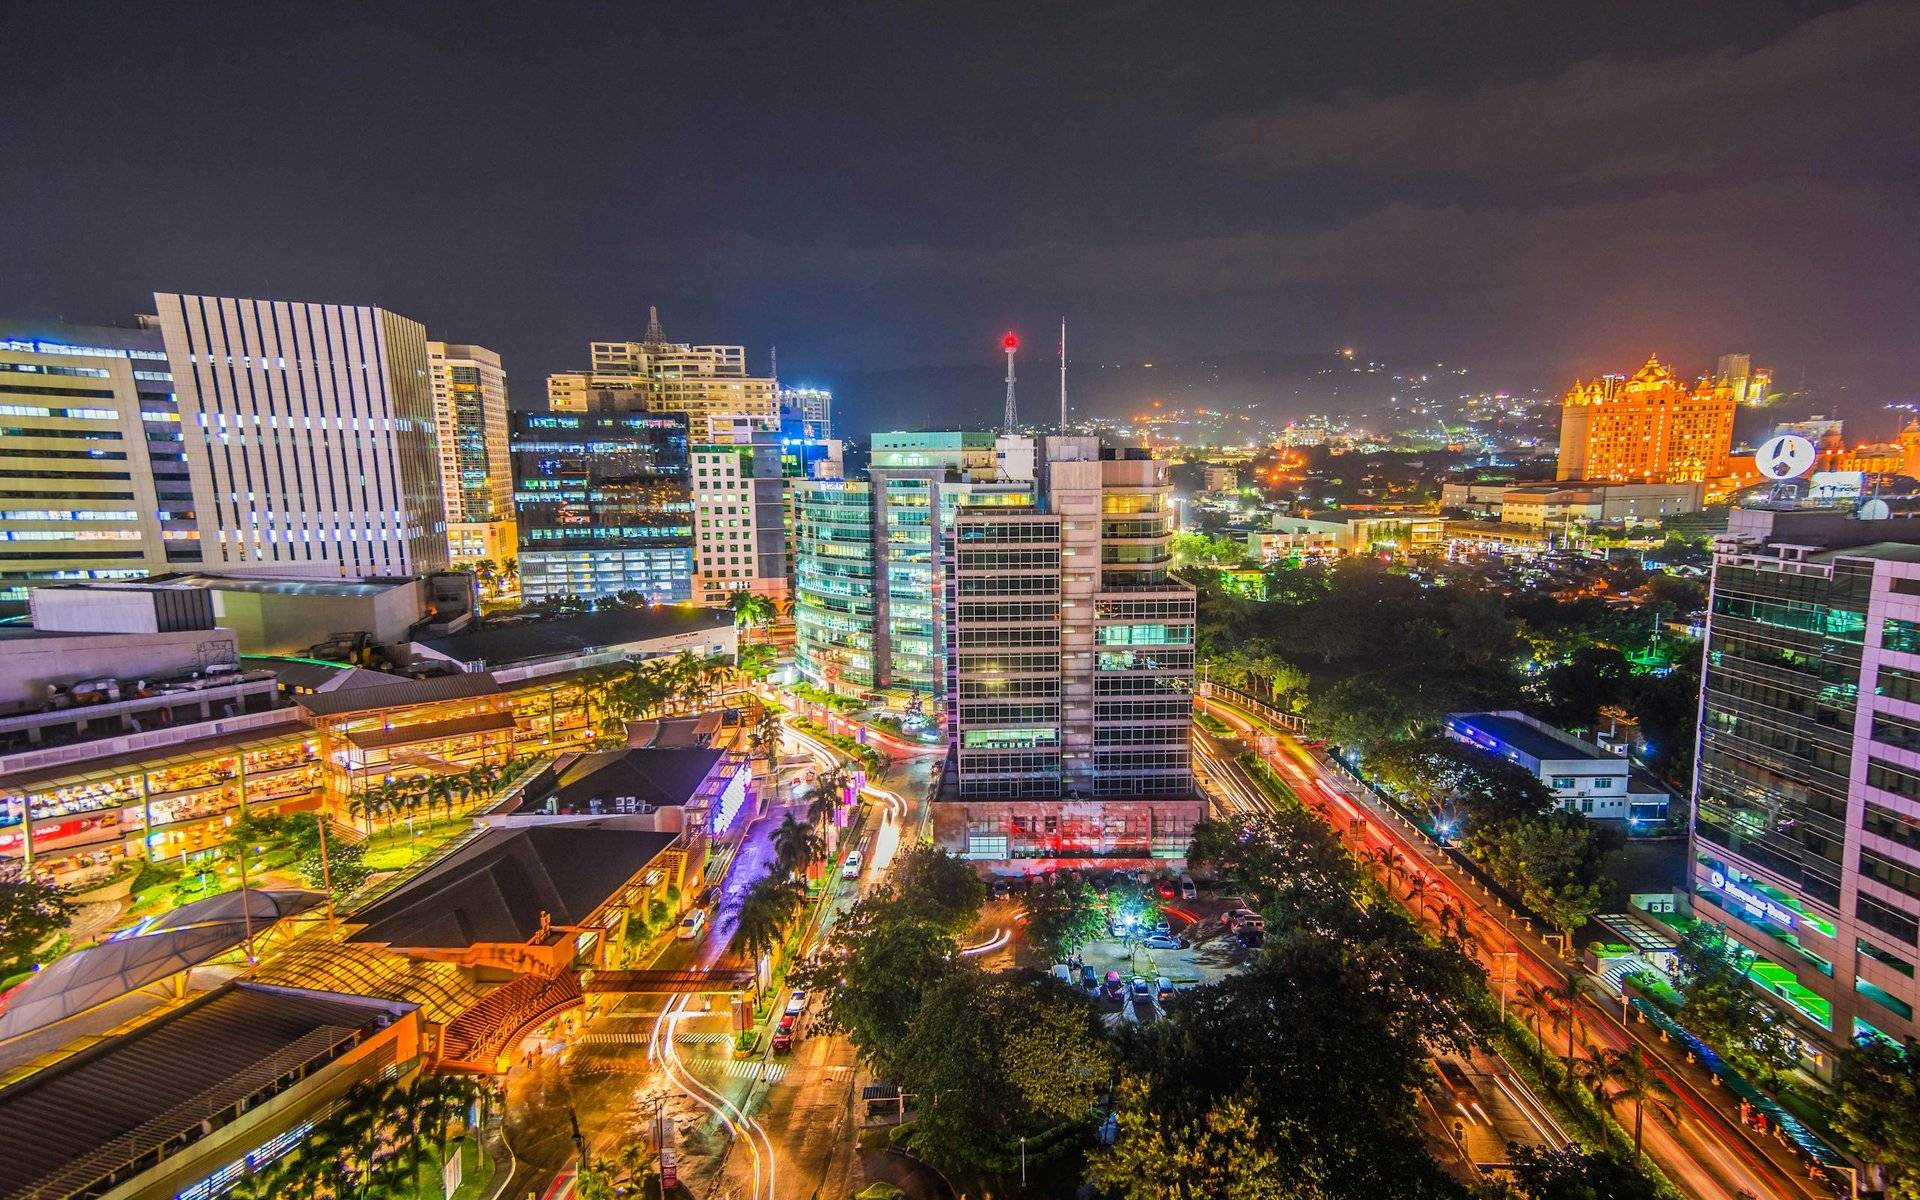 Cebu City